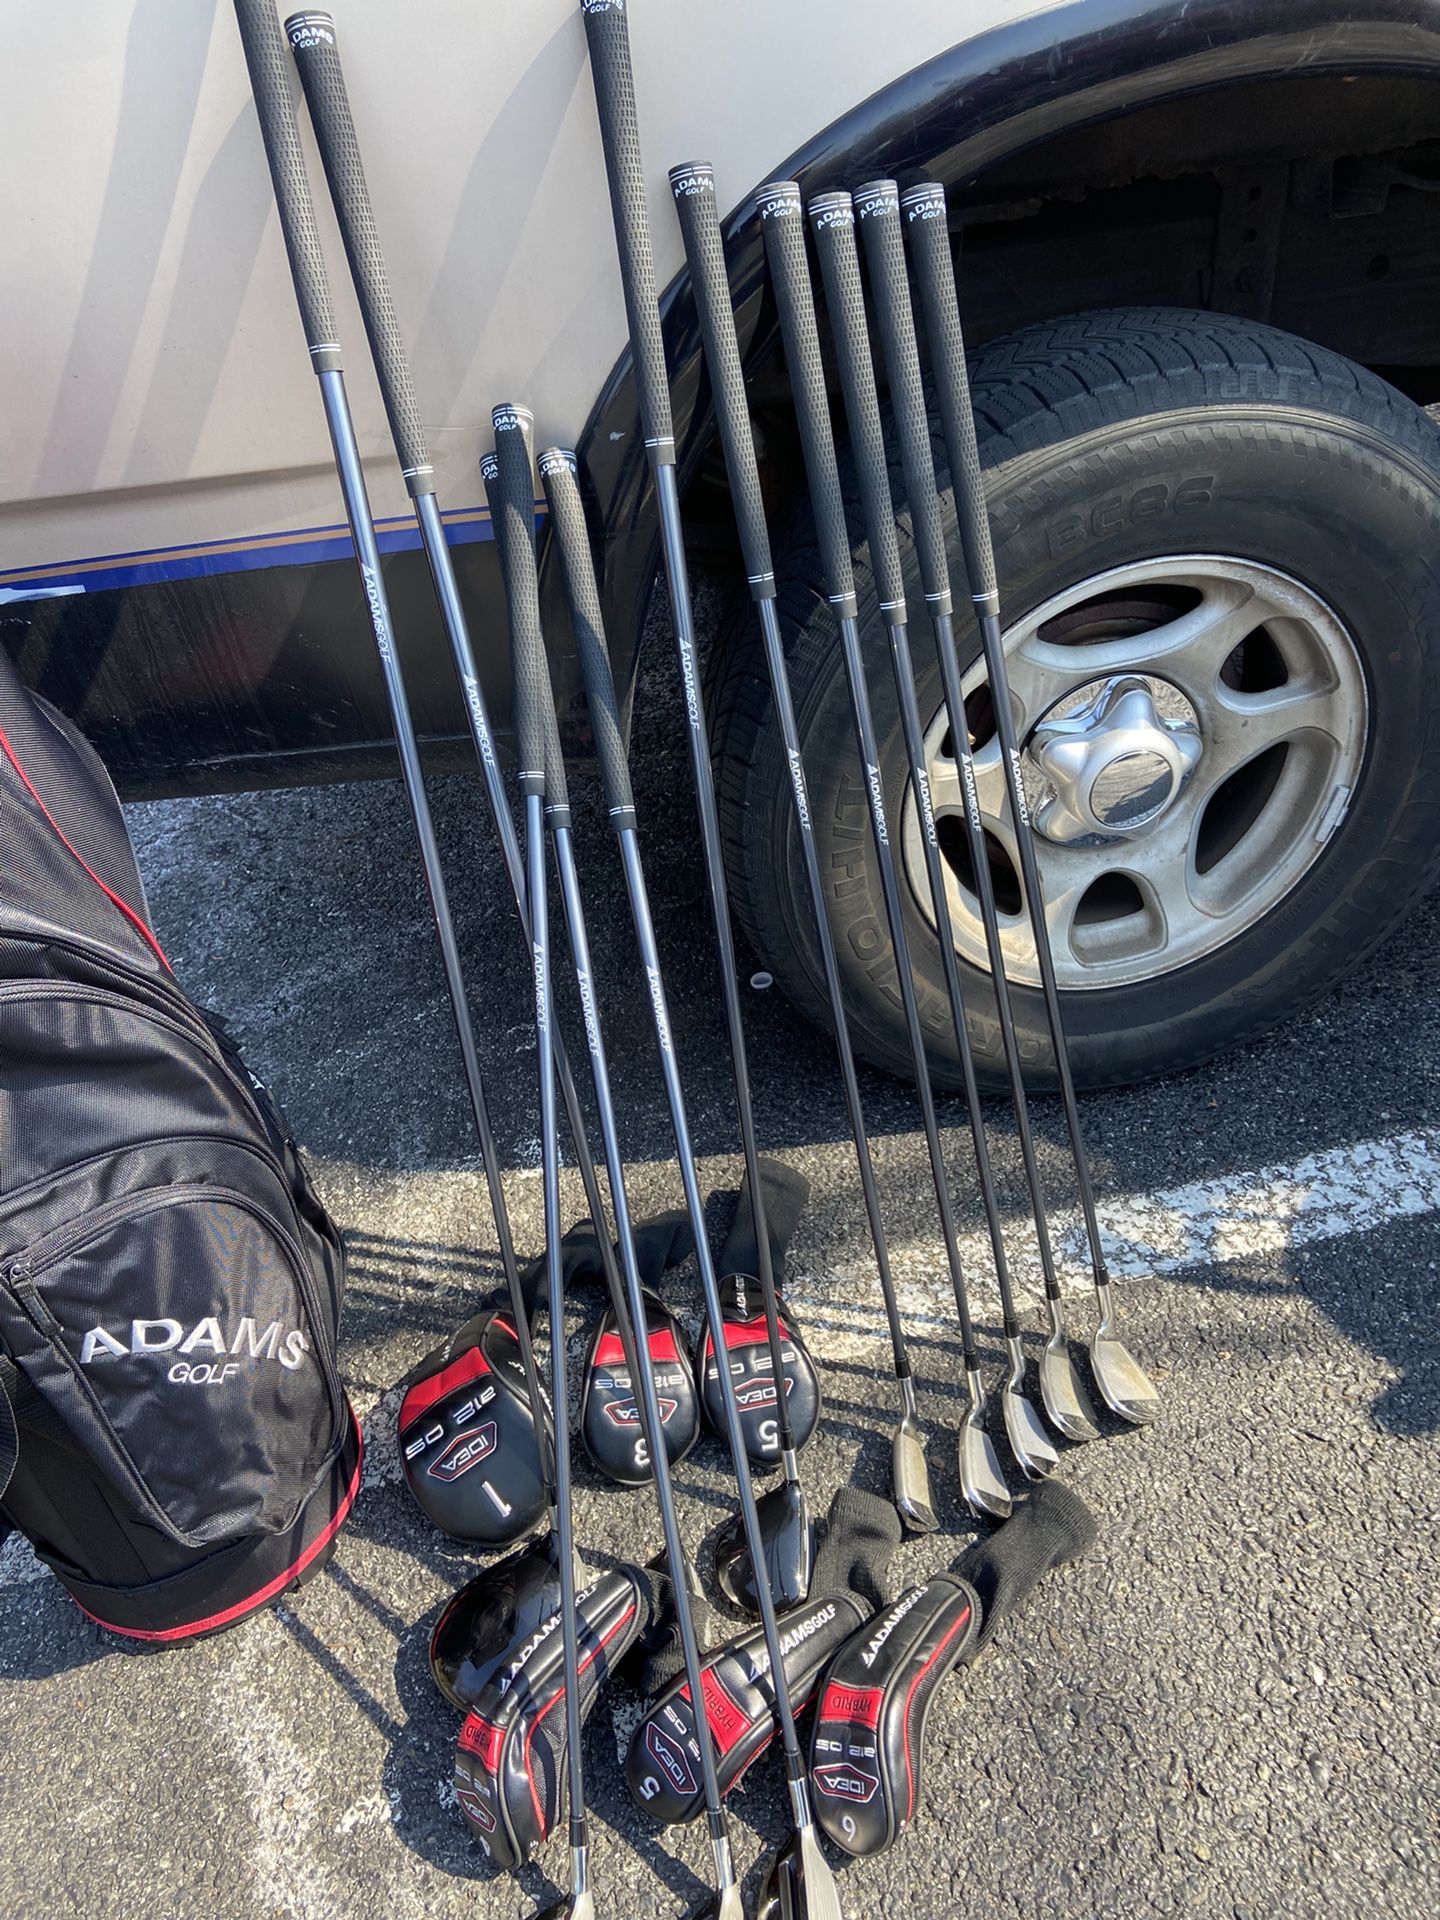 Adams golf Clubs With Bag  